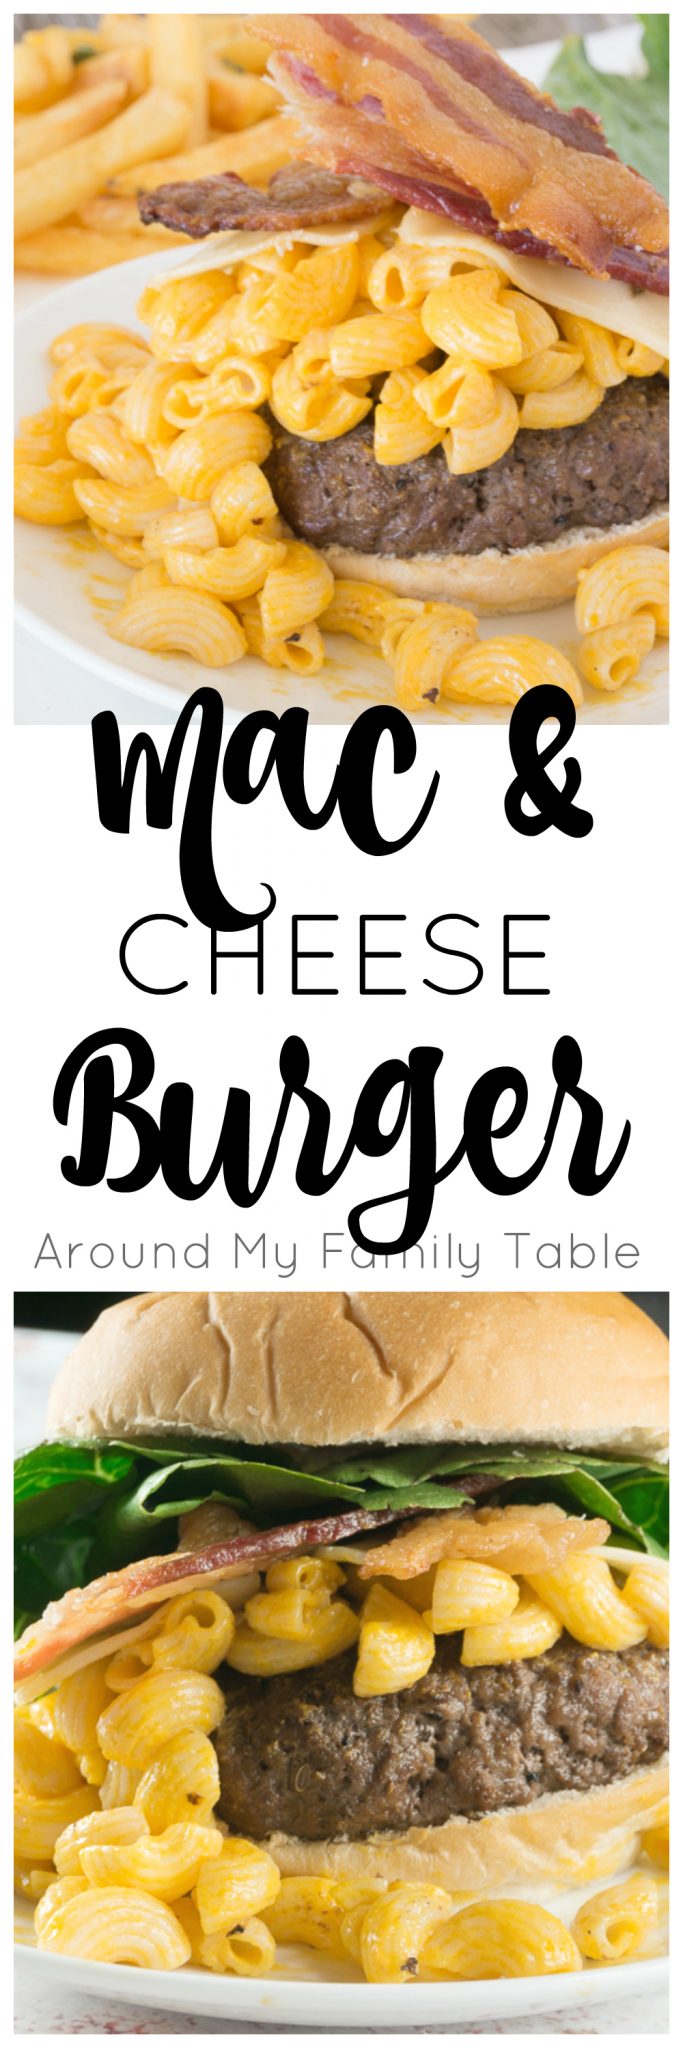 Mac & Cheese Burger - Around My Family Table